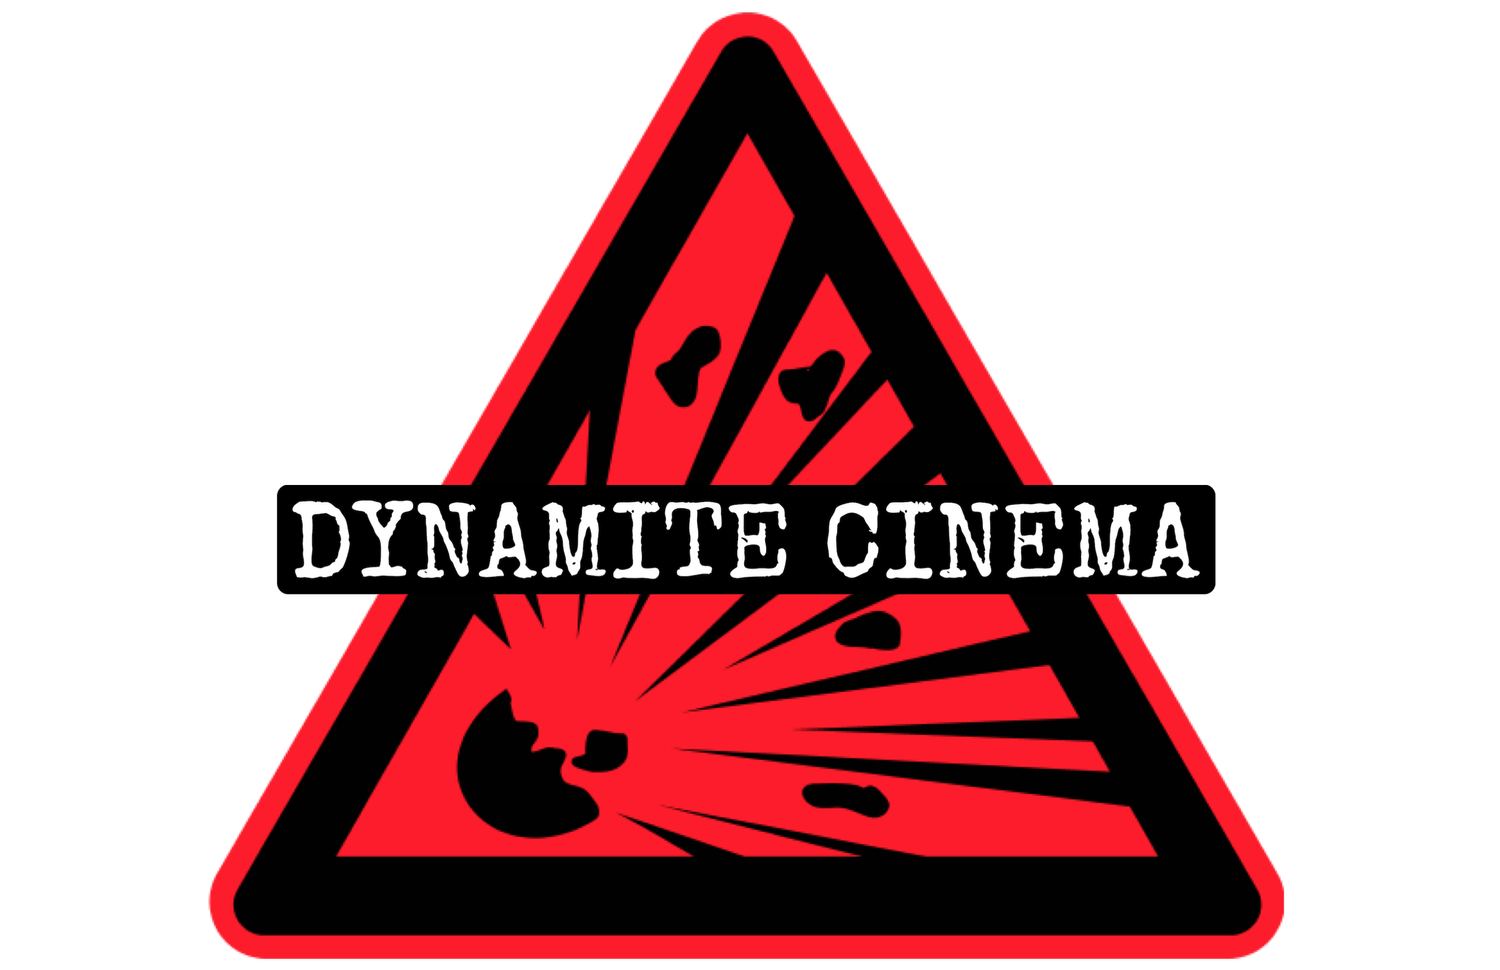 DYNAMITE CINEMA